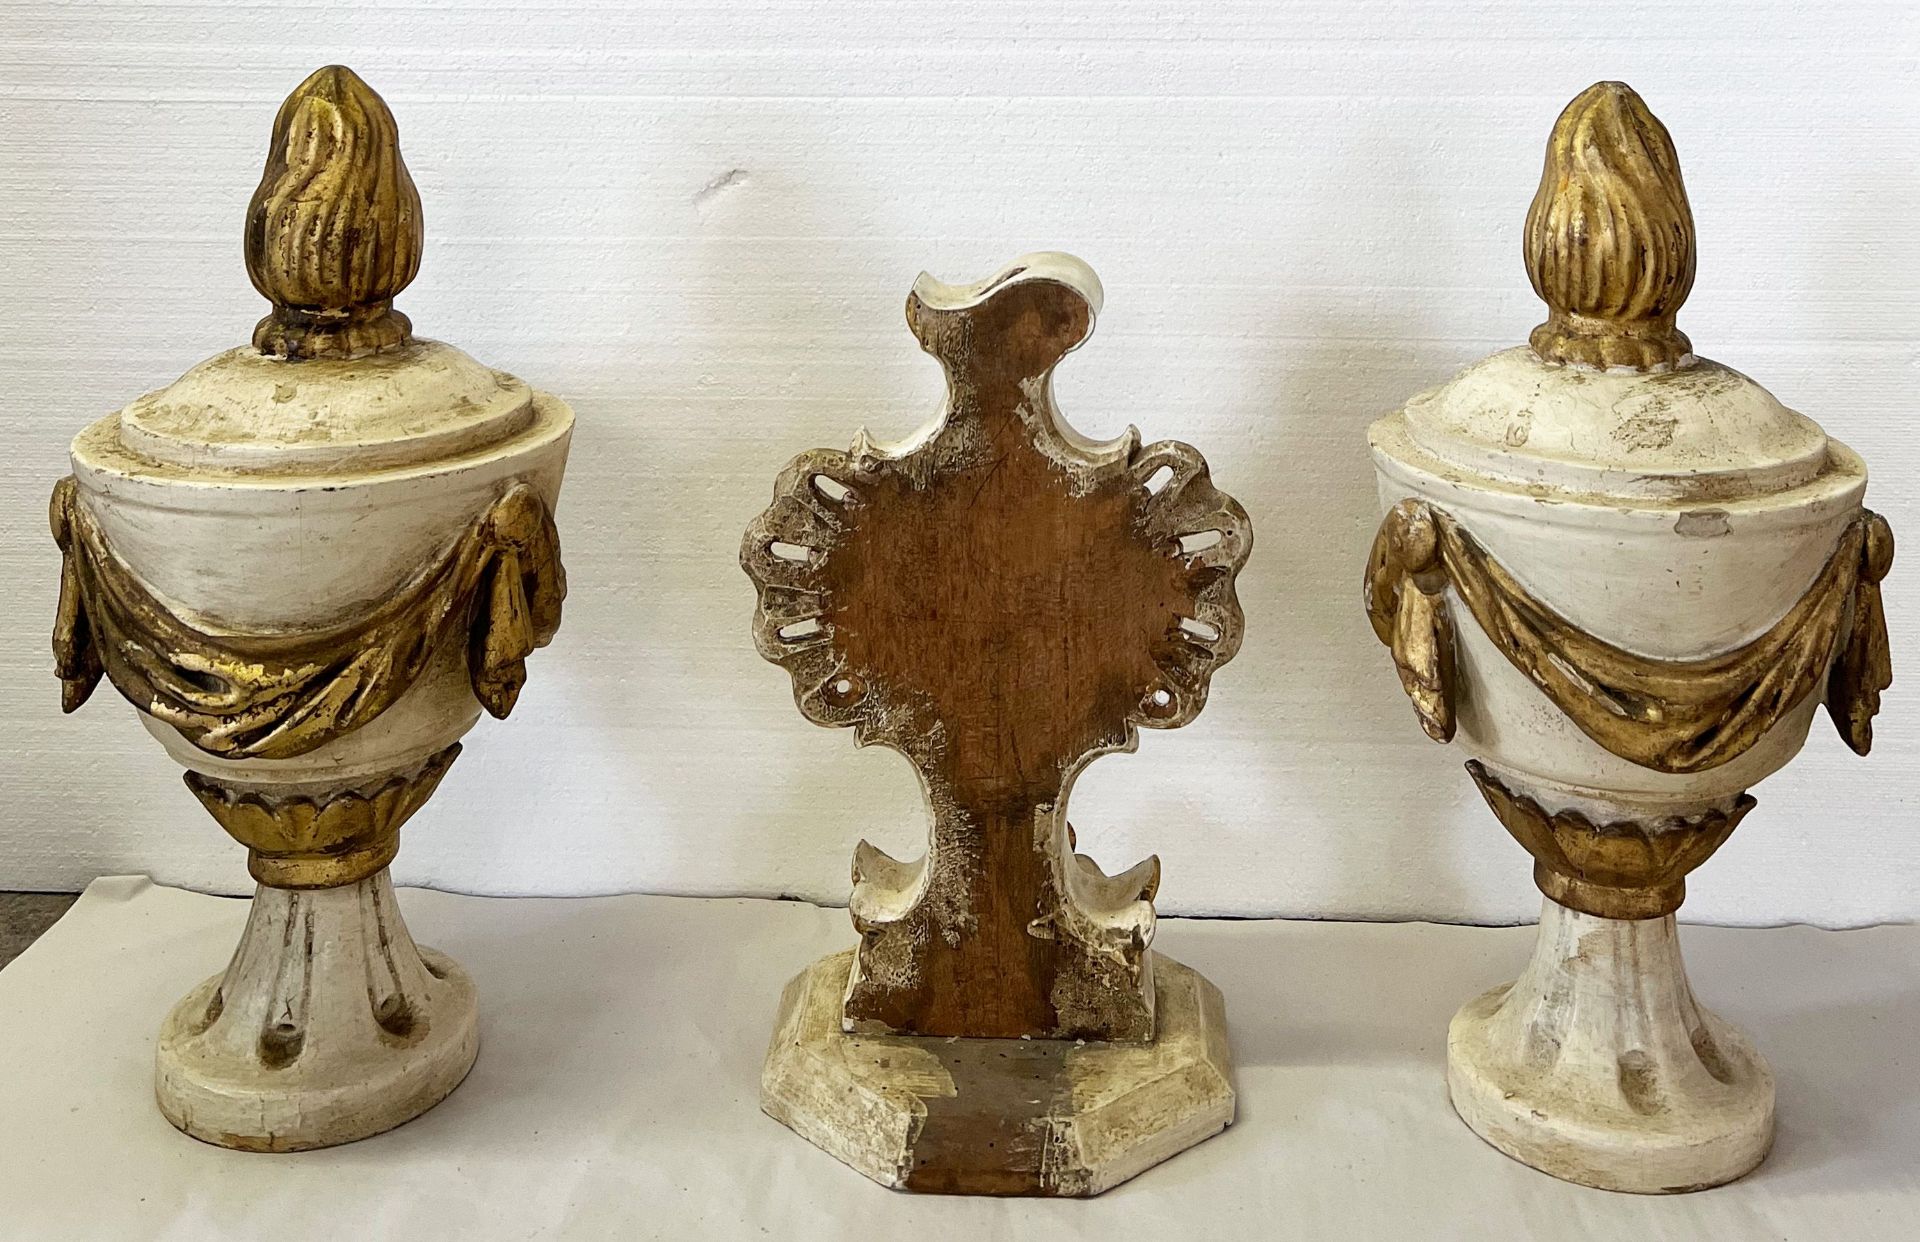 3 Altarvasen/ altar vases. Franken, barock und später, klassizistisch. 18. Jh./19. Jh., Holz, farbig - Bild 2 aus 3